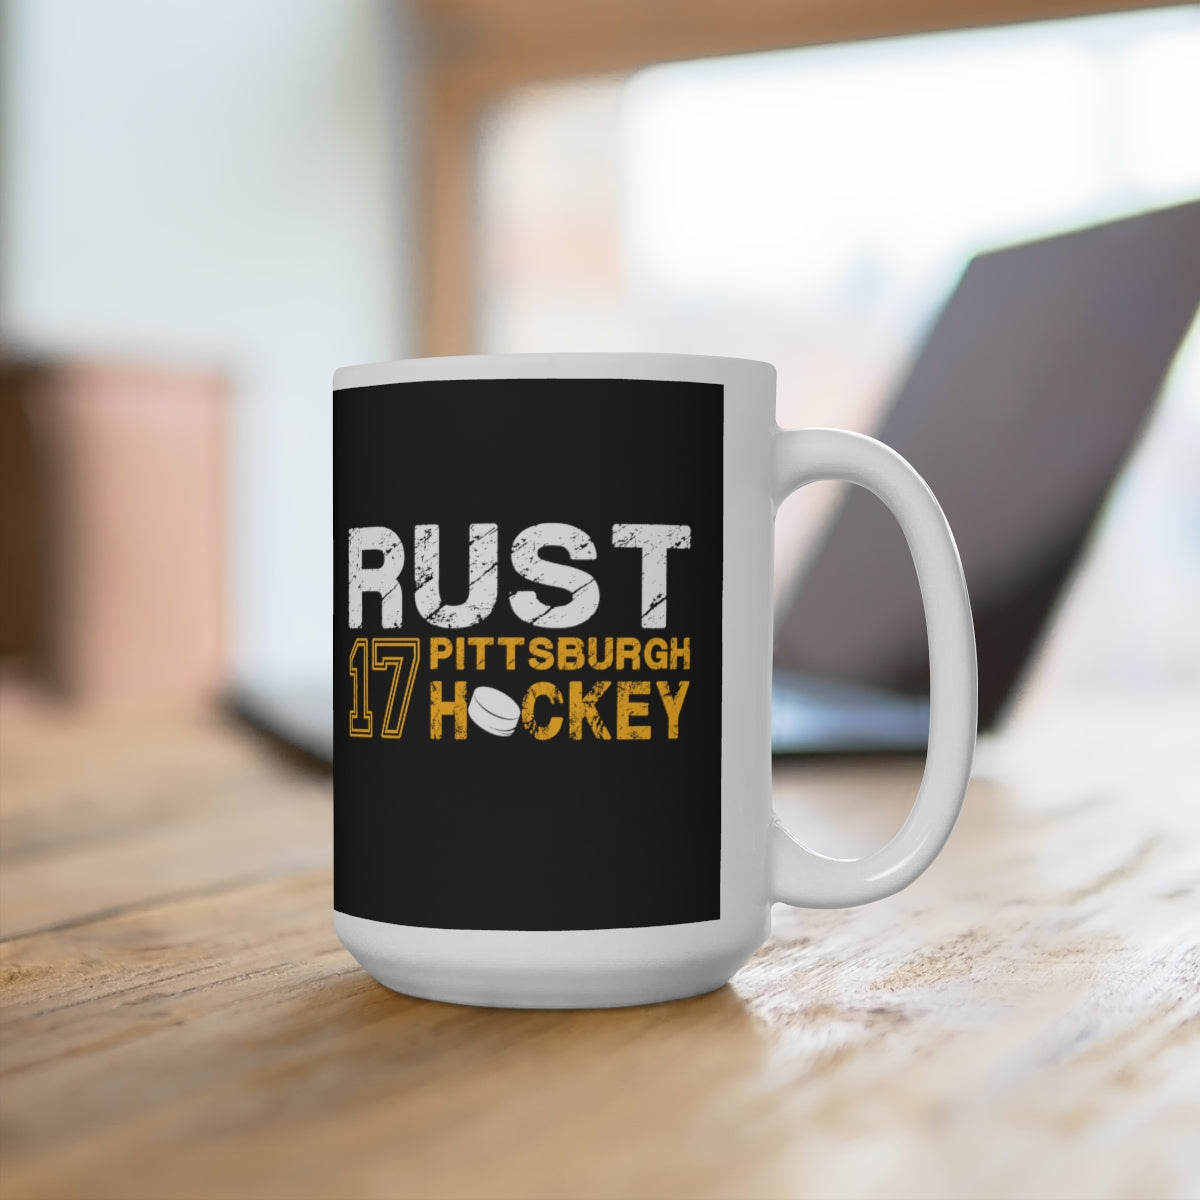 Rust 17 Pittsburgh Hockey Ceramic Coffee Mug In Black, 15oz